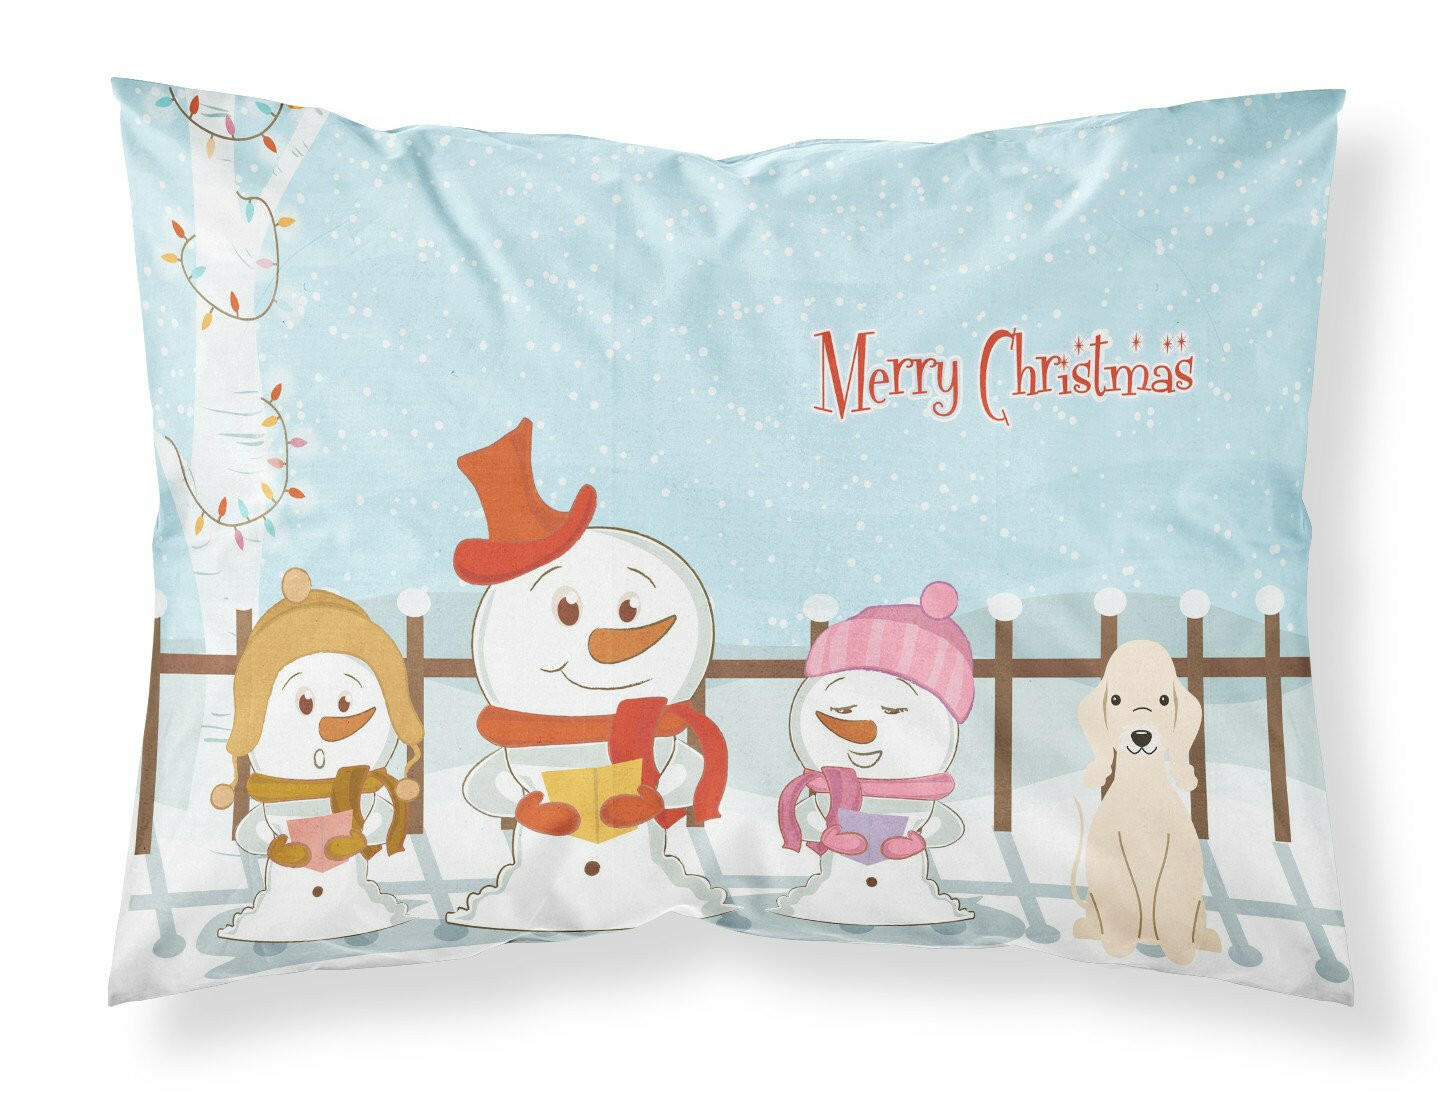 Merry Christmas Carolers Bedlington Terrier Sandy Fabric Standard Pillowcase BB2422PILLOWCASE by Caroline's Treasures